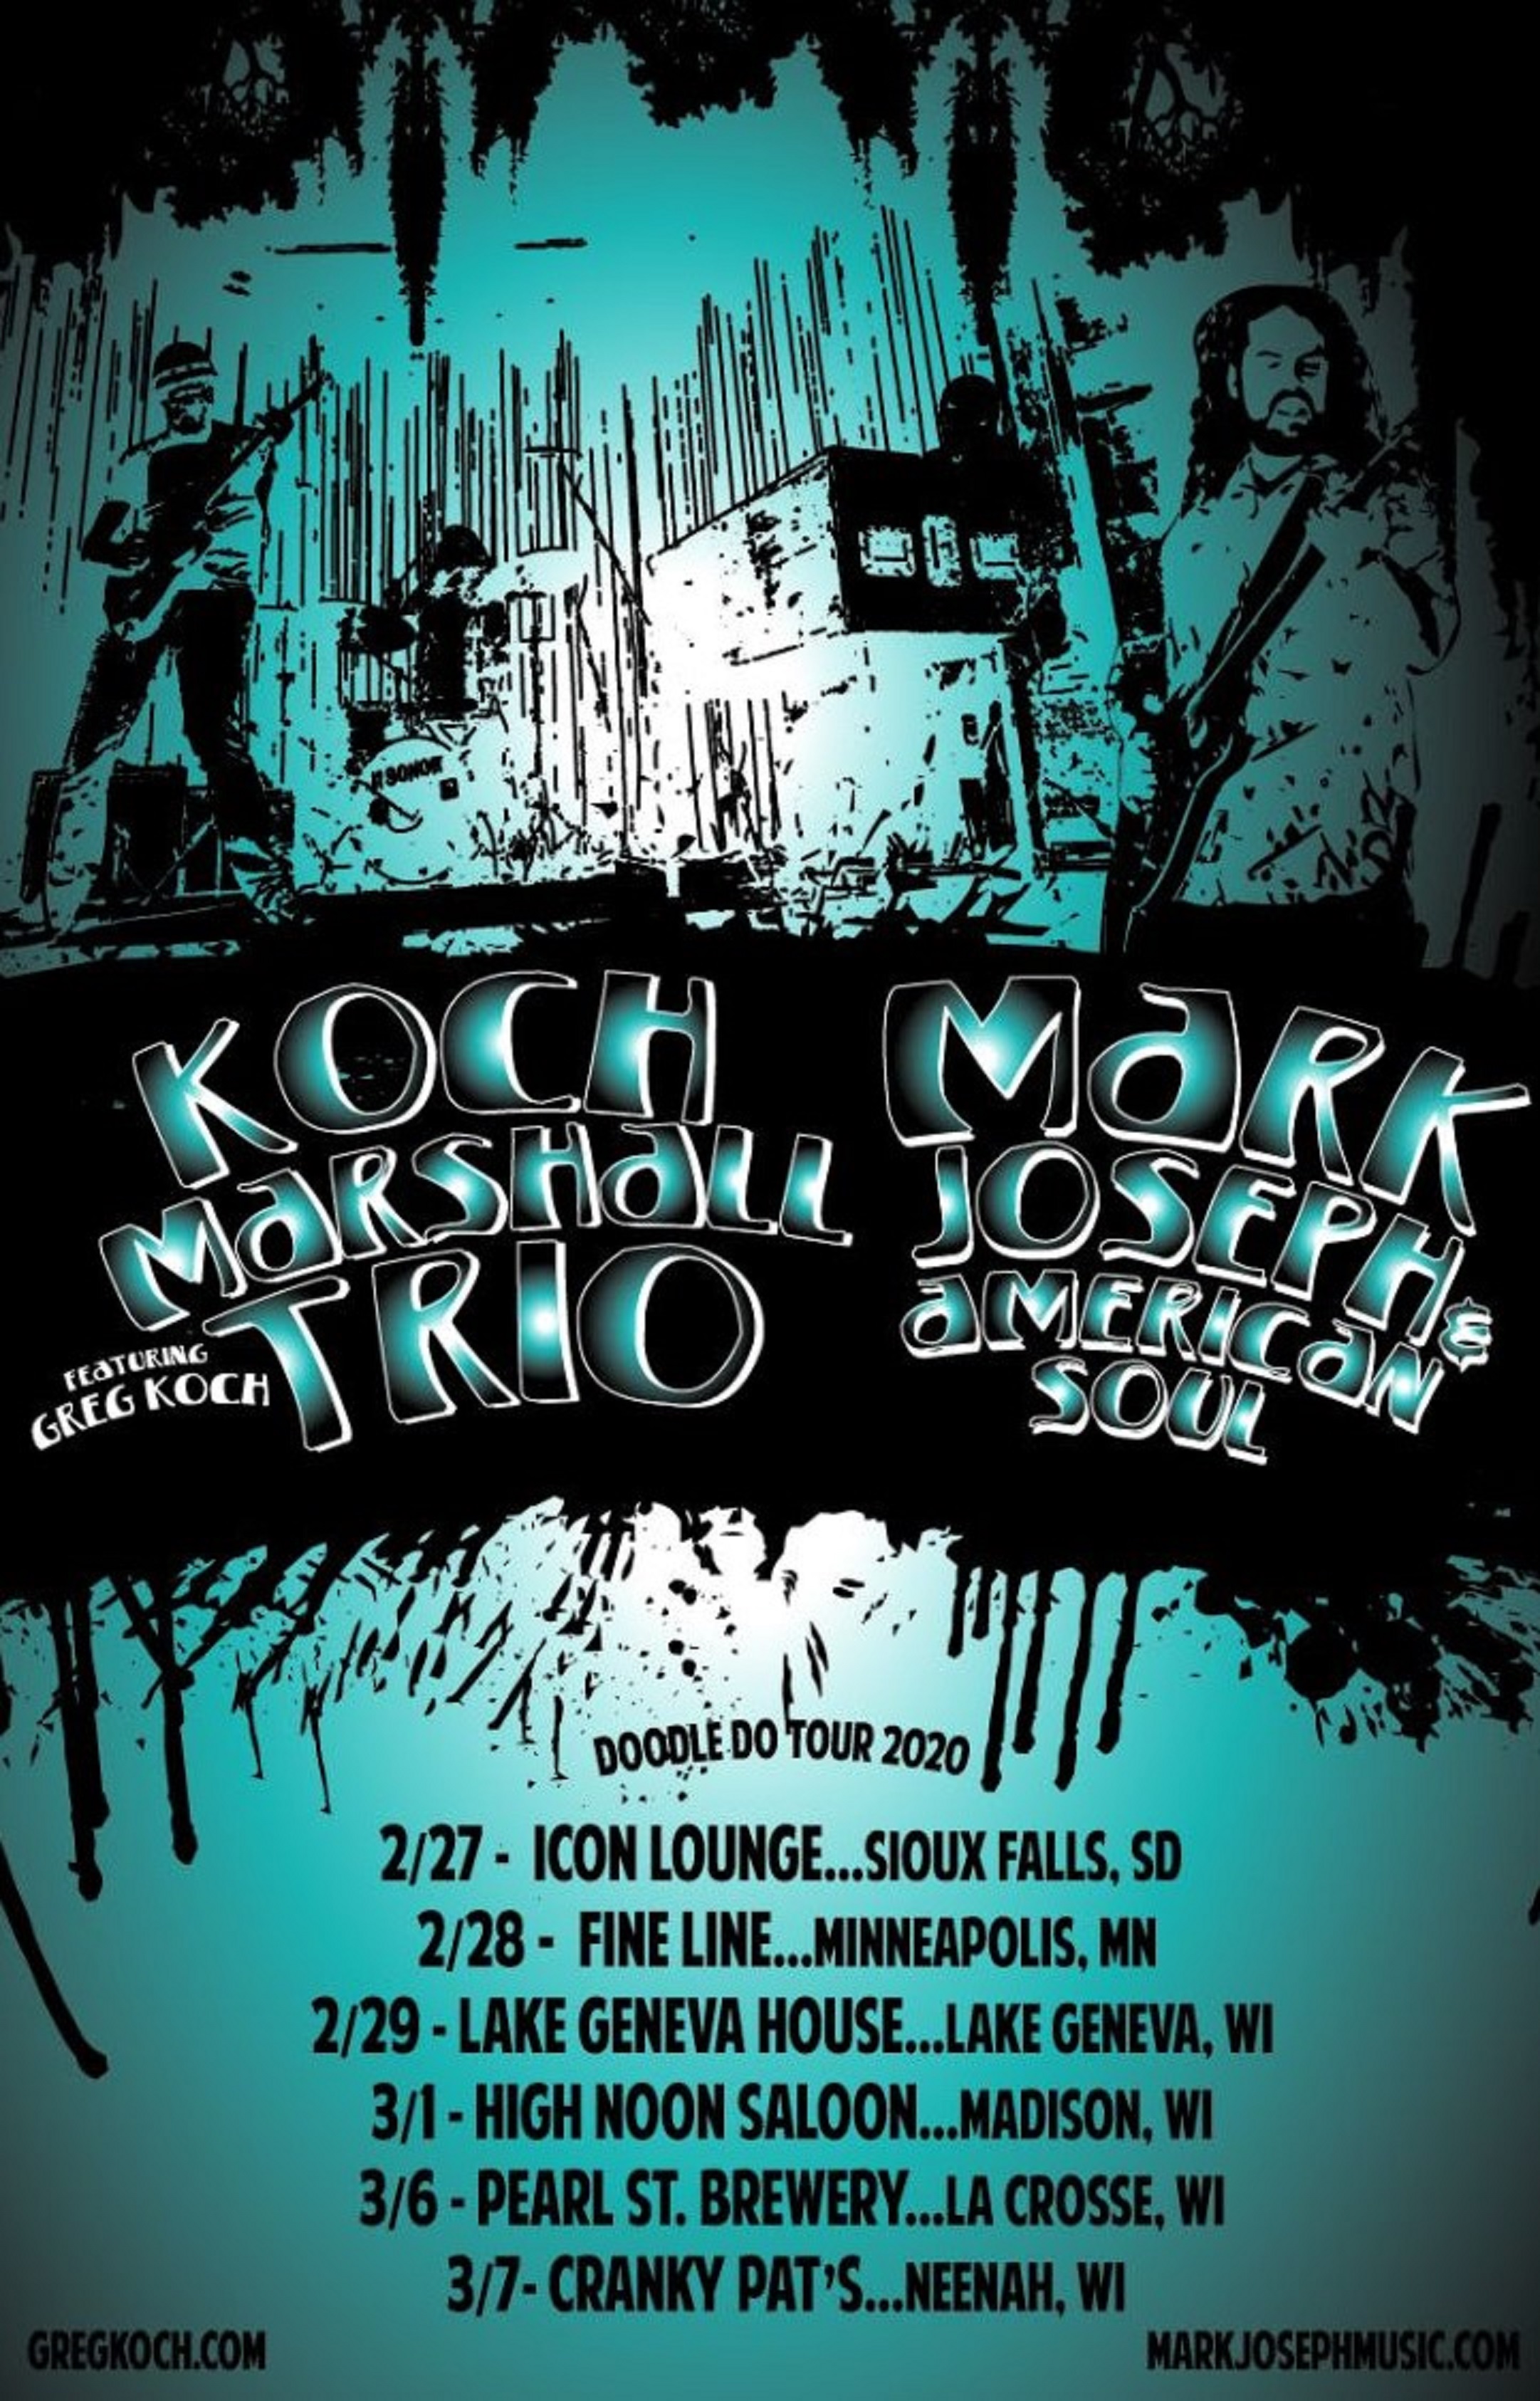 Koch-Marshall Trio and Mark Joseph & American Soul on Tour